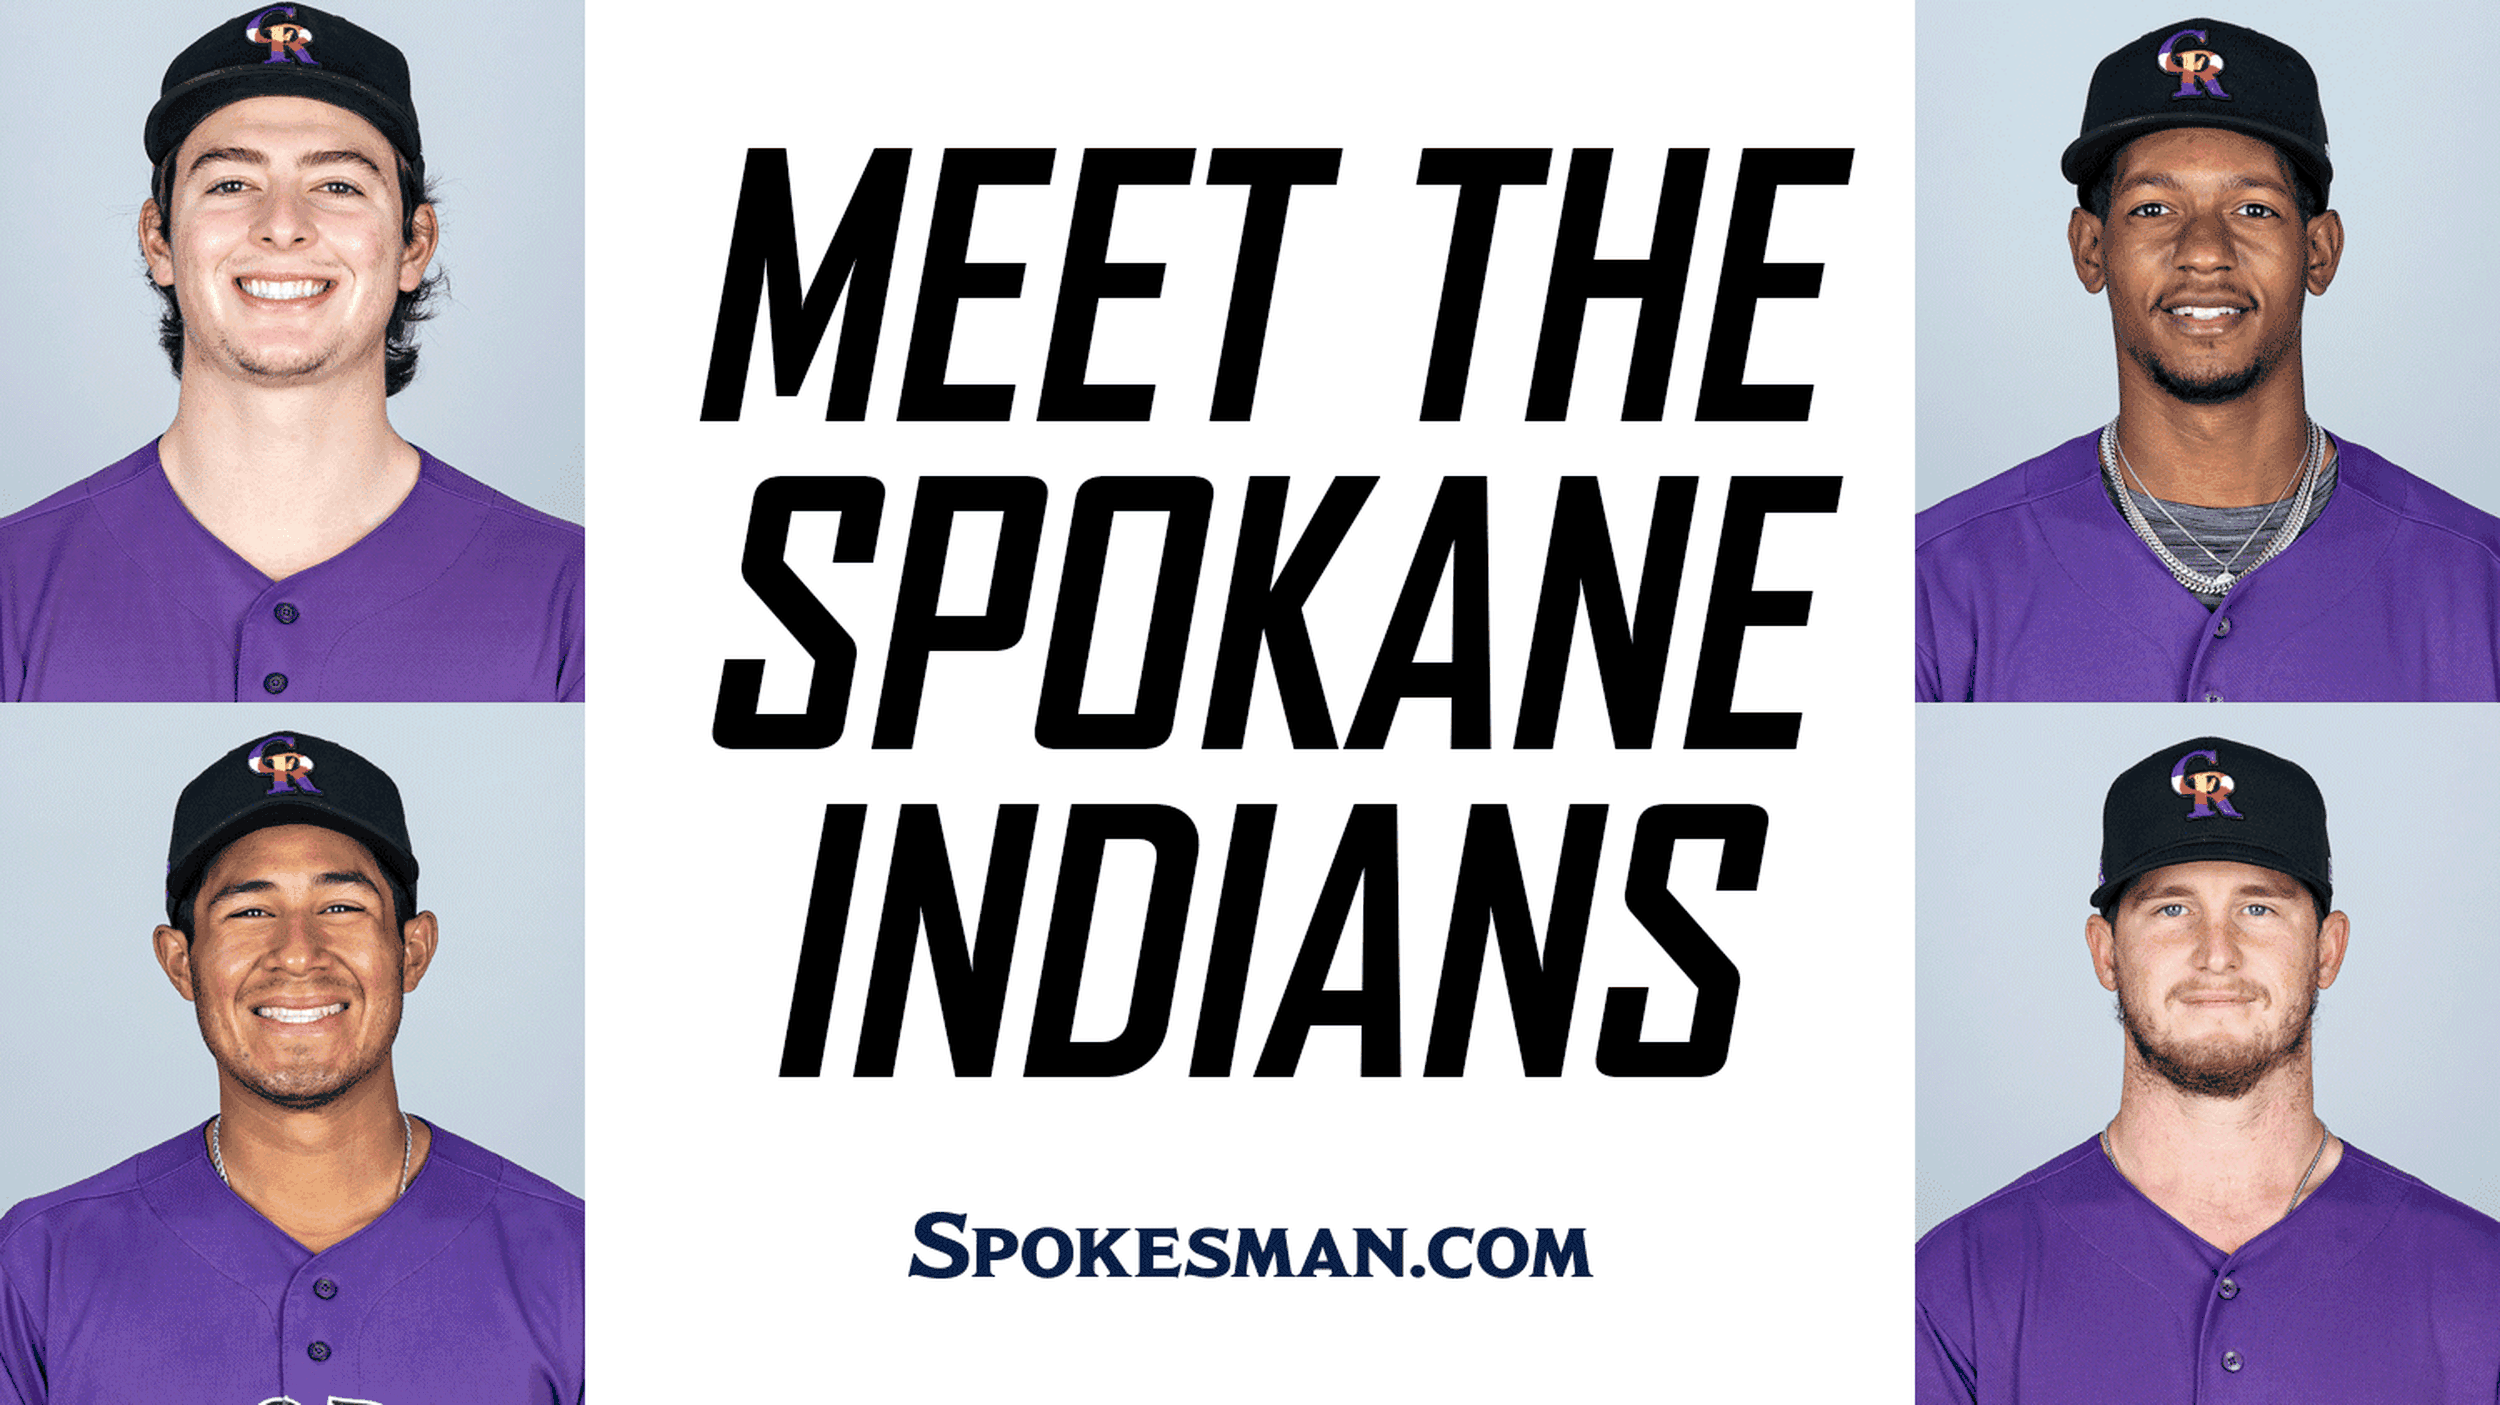 Spokane indians 16, Hillsboro 1! GO INDIANS! : r/Spokane